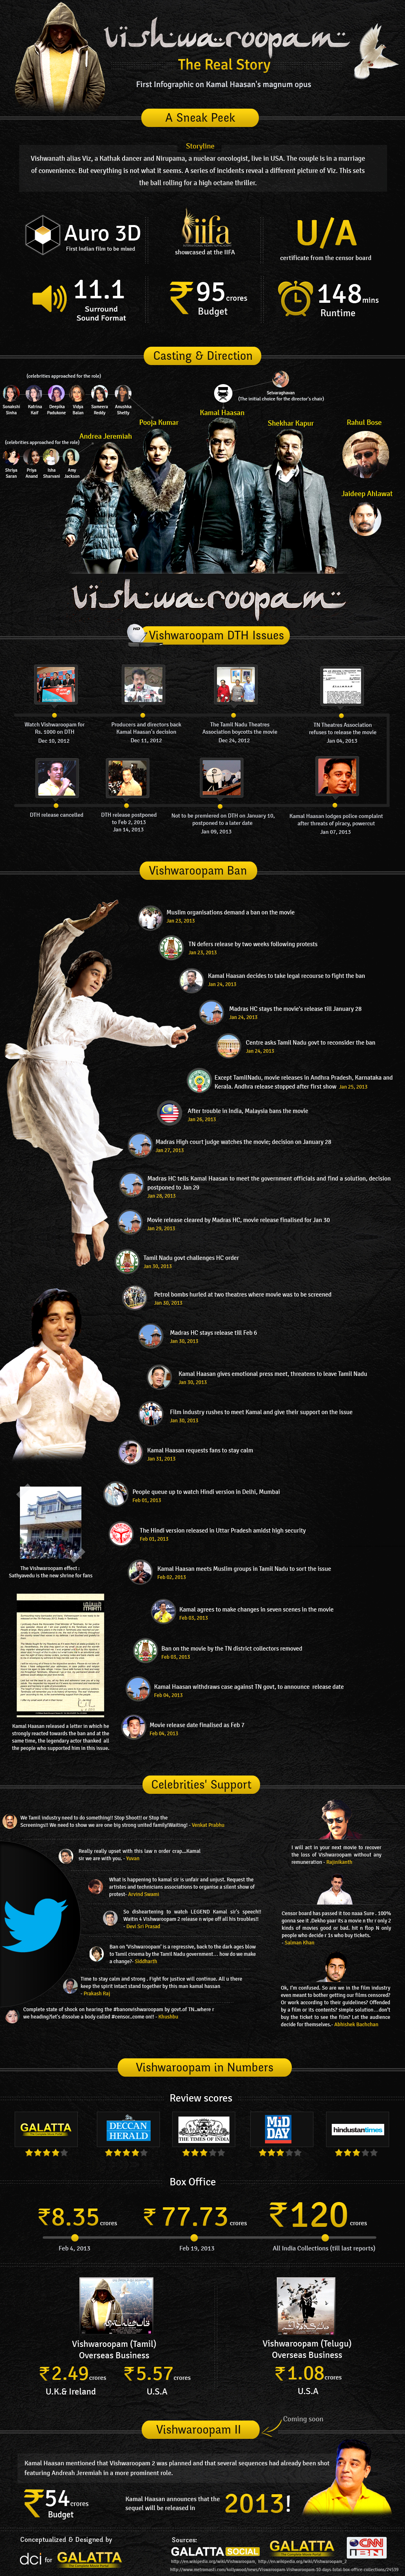 Kamal Haasan's Vishwaroopam - World's First infographic on the movie!